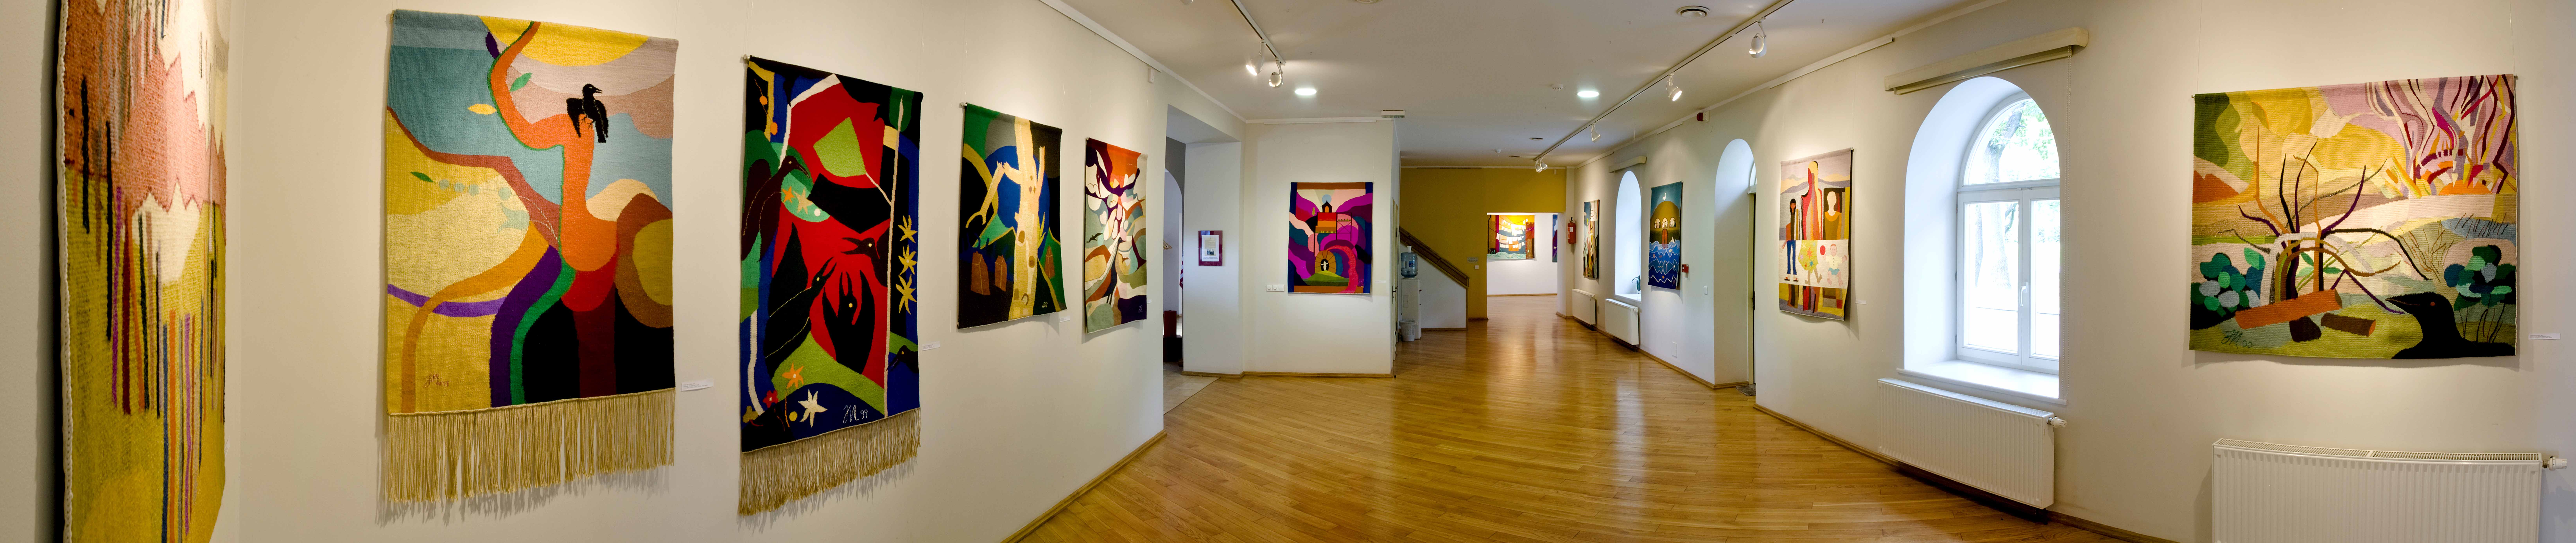 Janinos Monkutės-Marks gobelenai ir kilimai (1970-2010) / Tapestries and rugs by Janina Monkute-Marks (1970-2010)